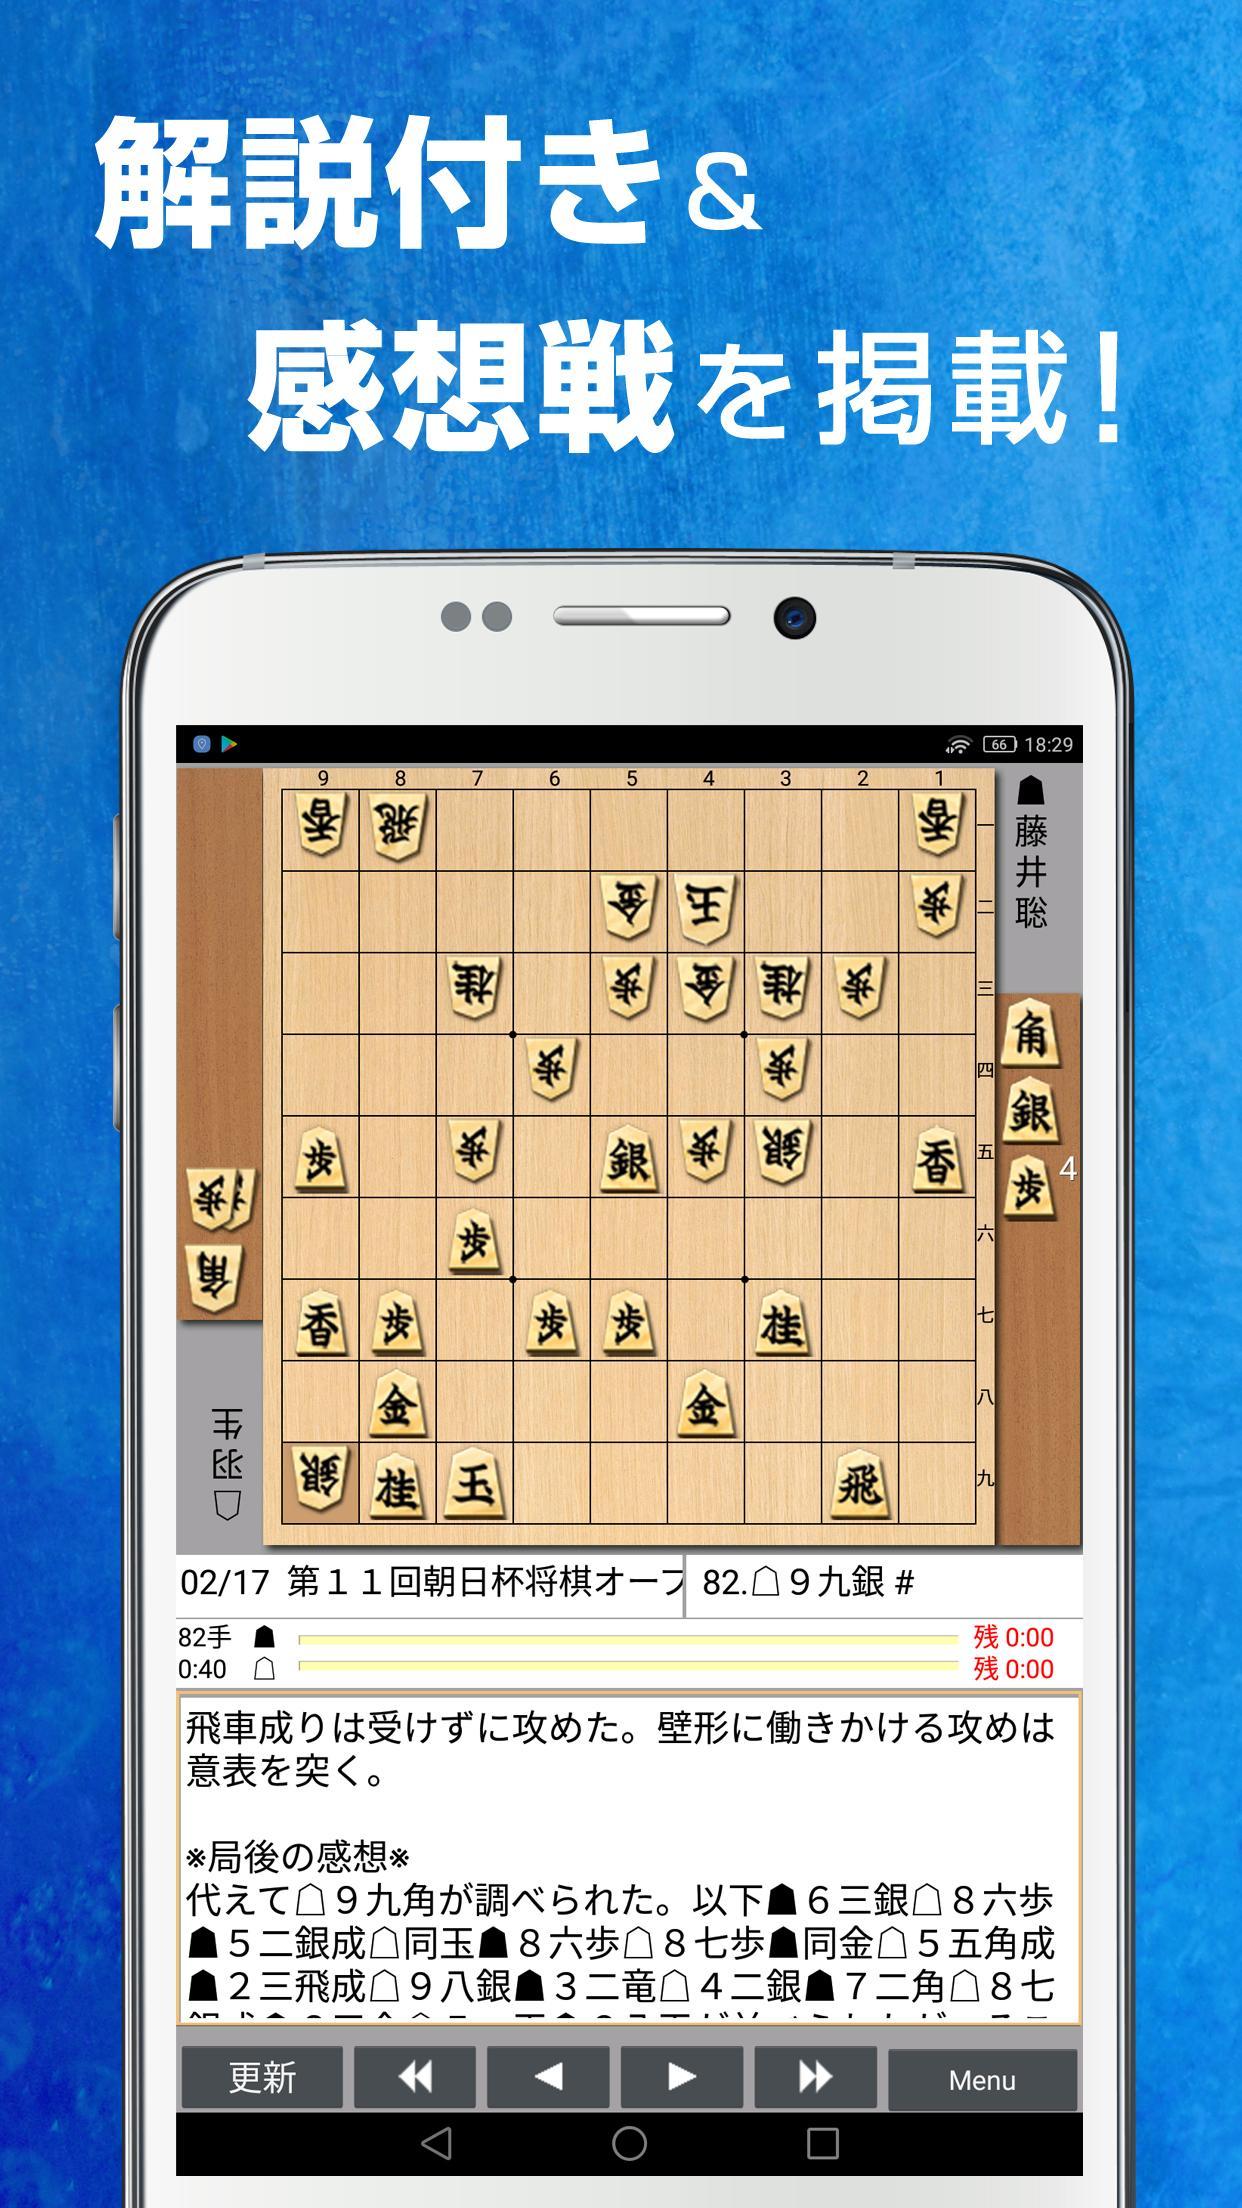 Shogi Live Subscription 2014 7.17 Screenshot 11